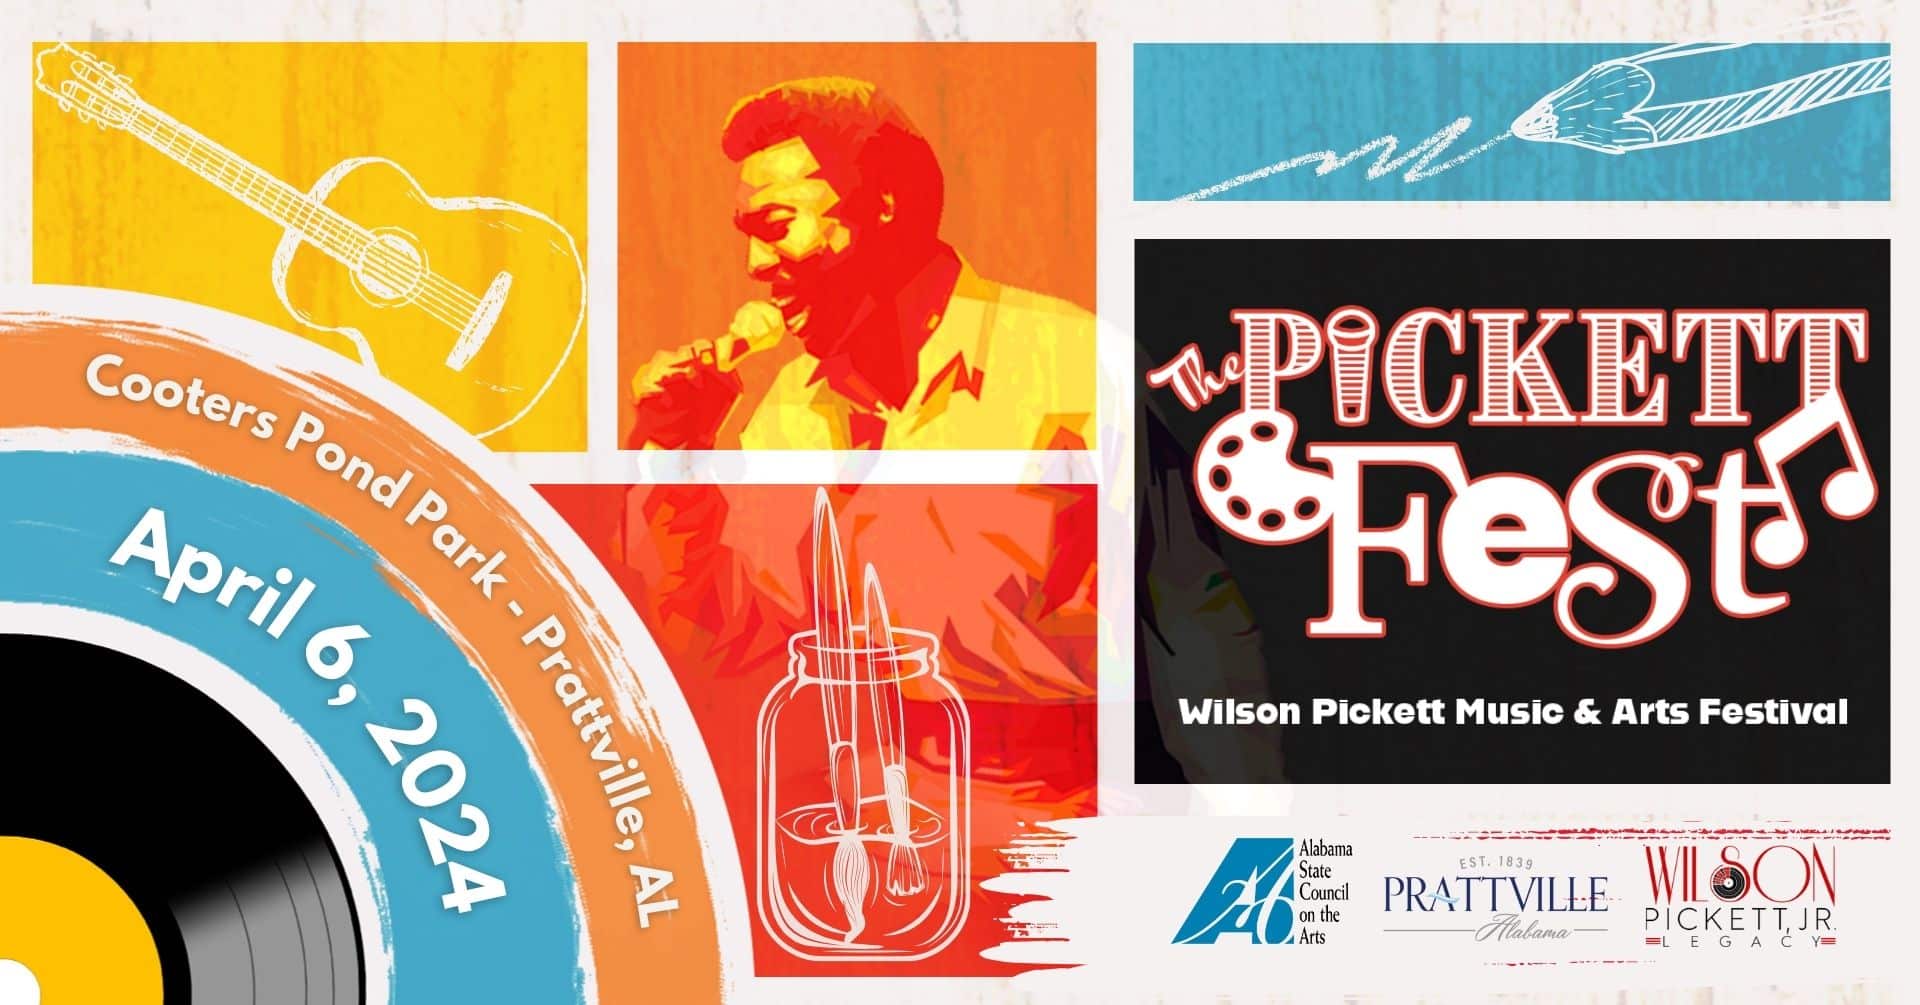 Wilson Pickett Art and Music Festival